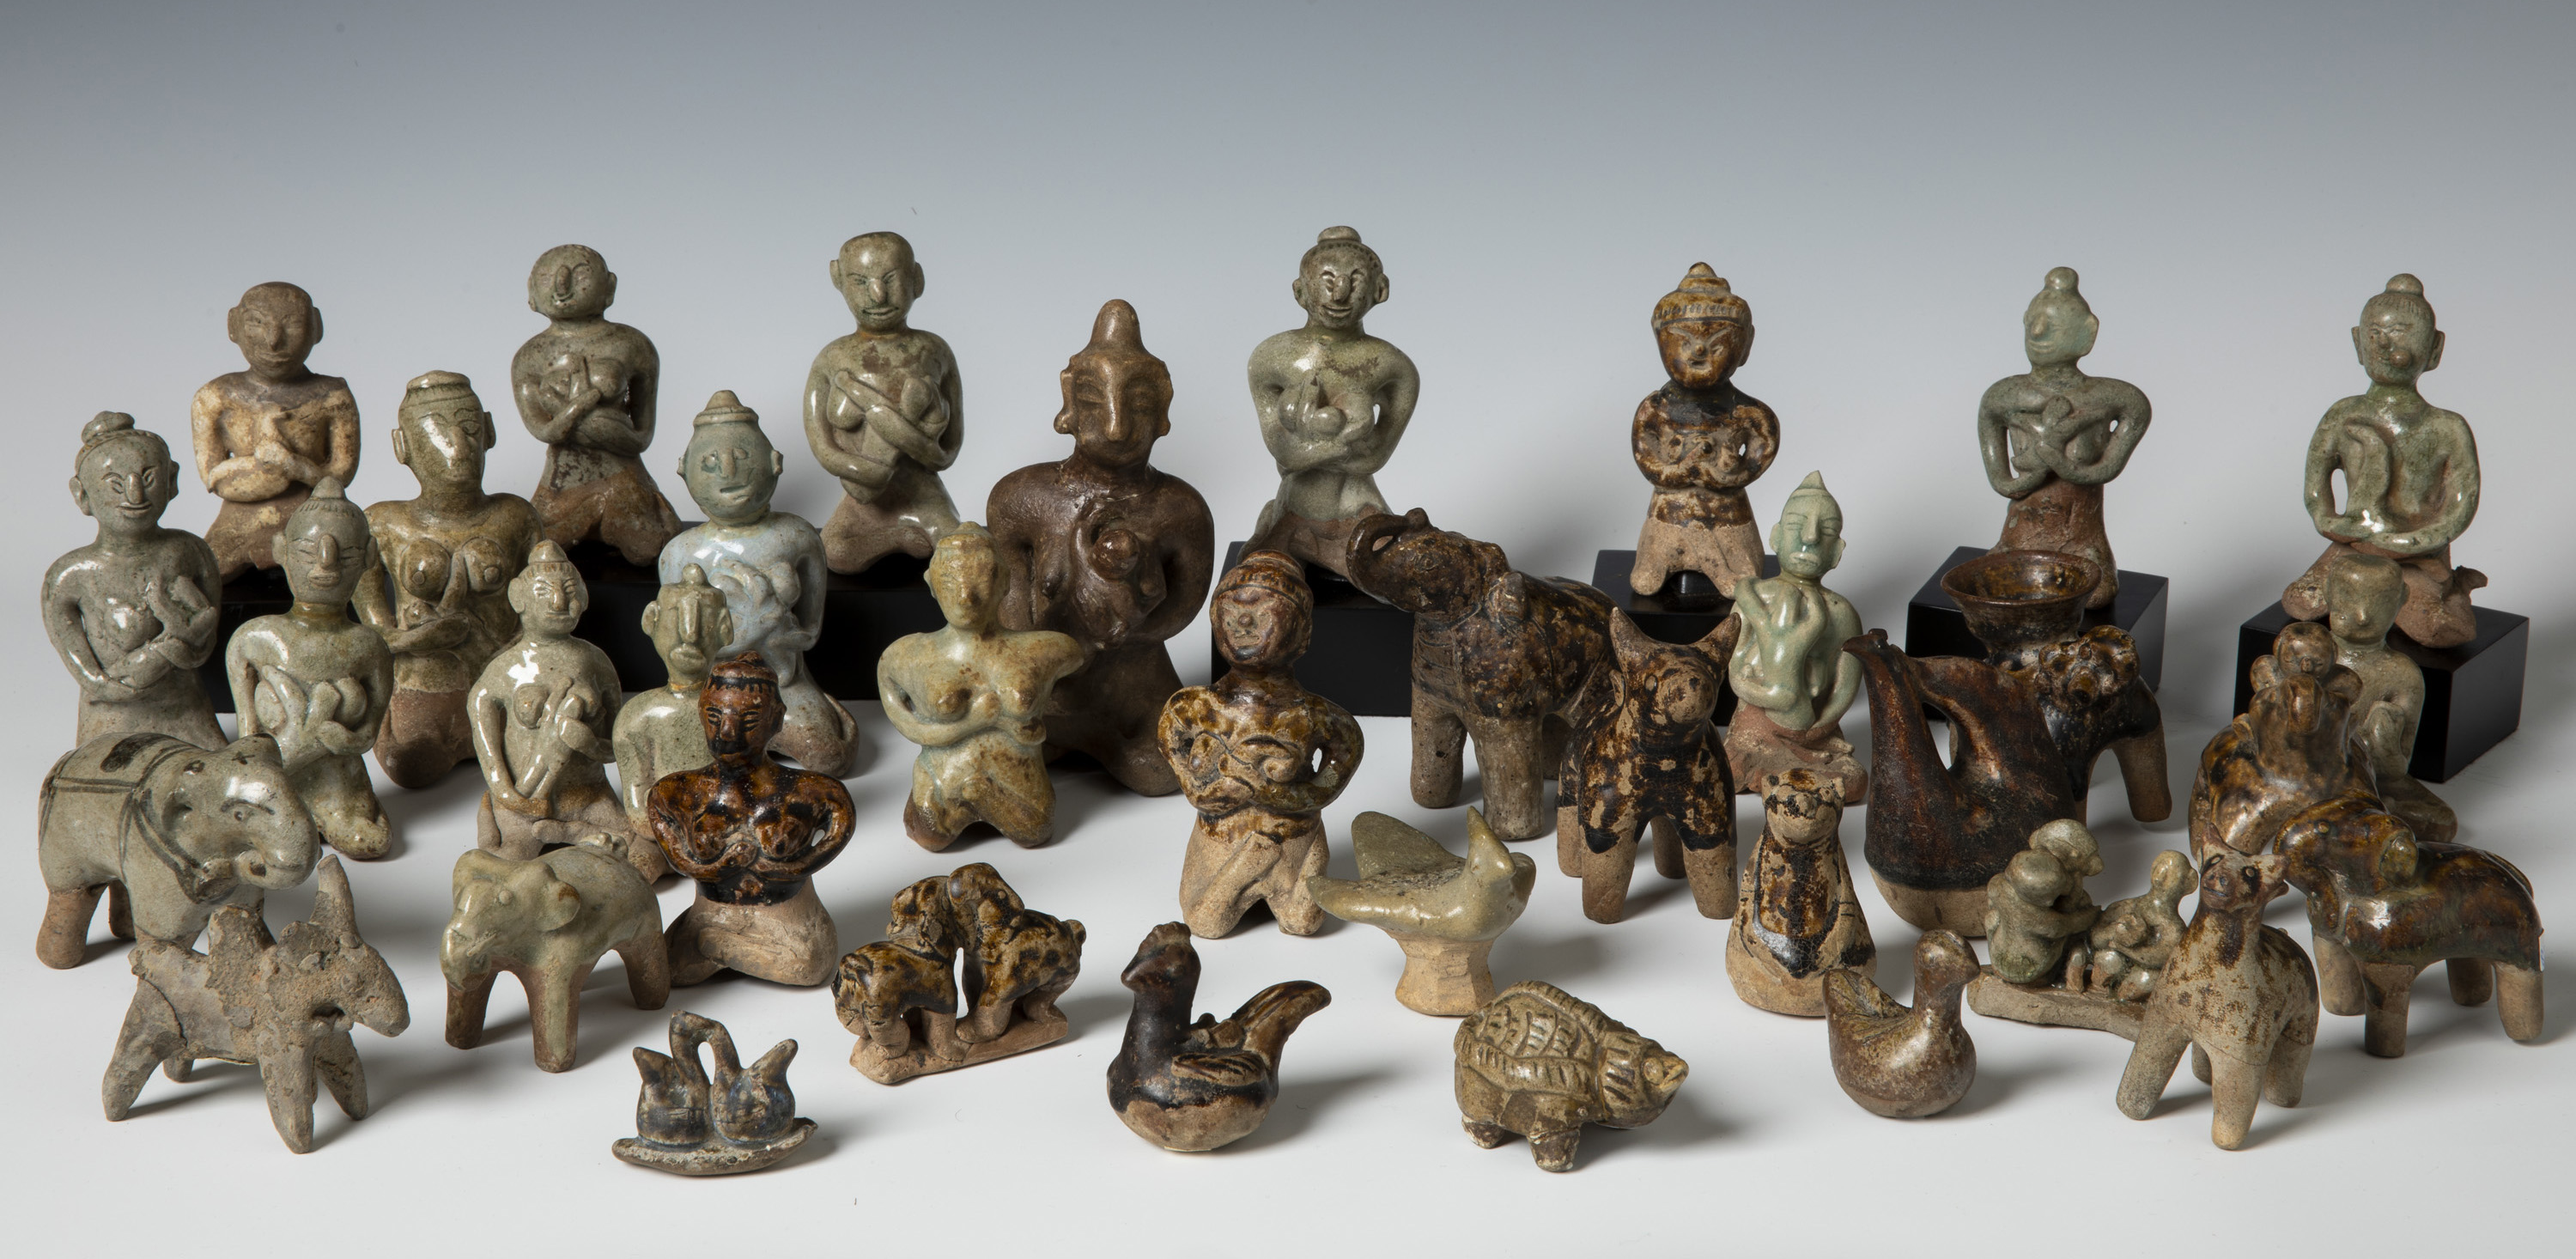 A Superb Collection of Sukhothai & Sawankhalok NE Thailand Ceramic Figures 13th-14th C